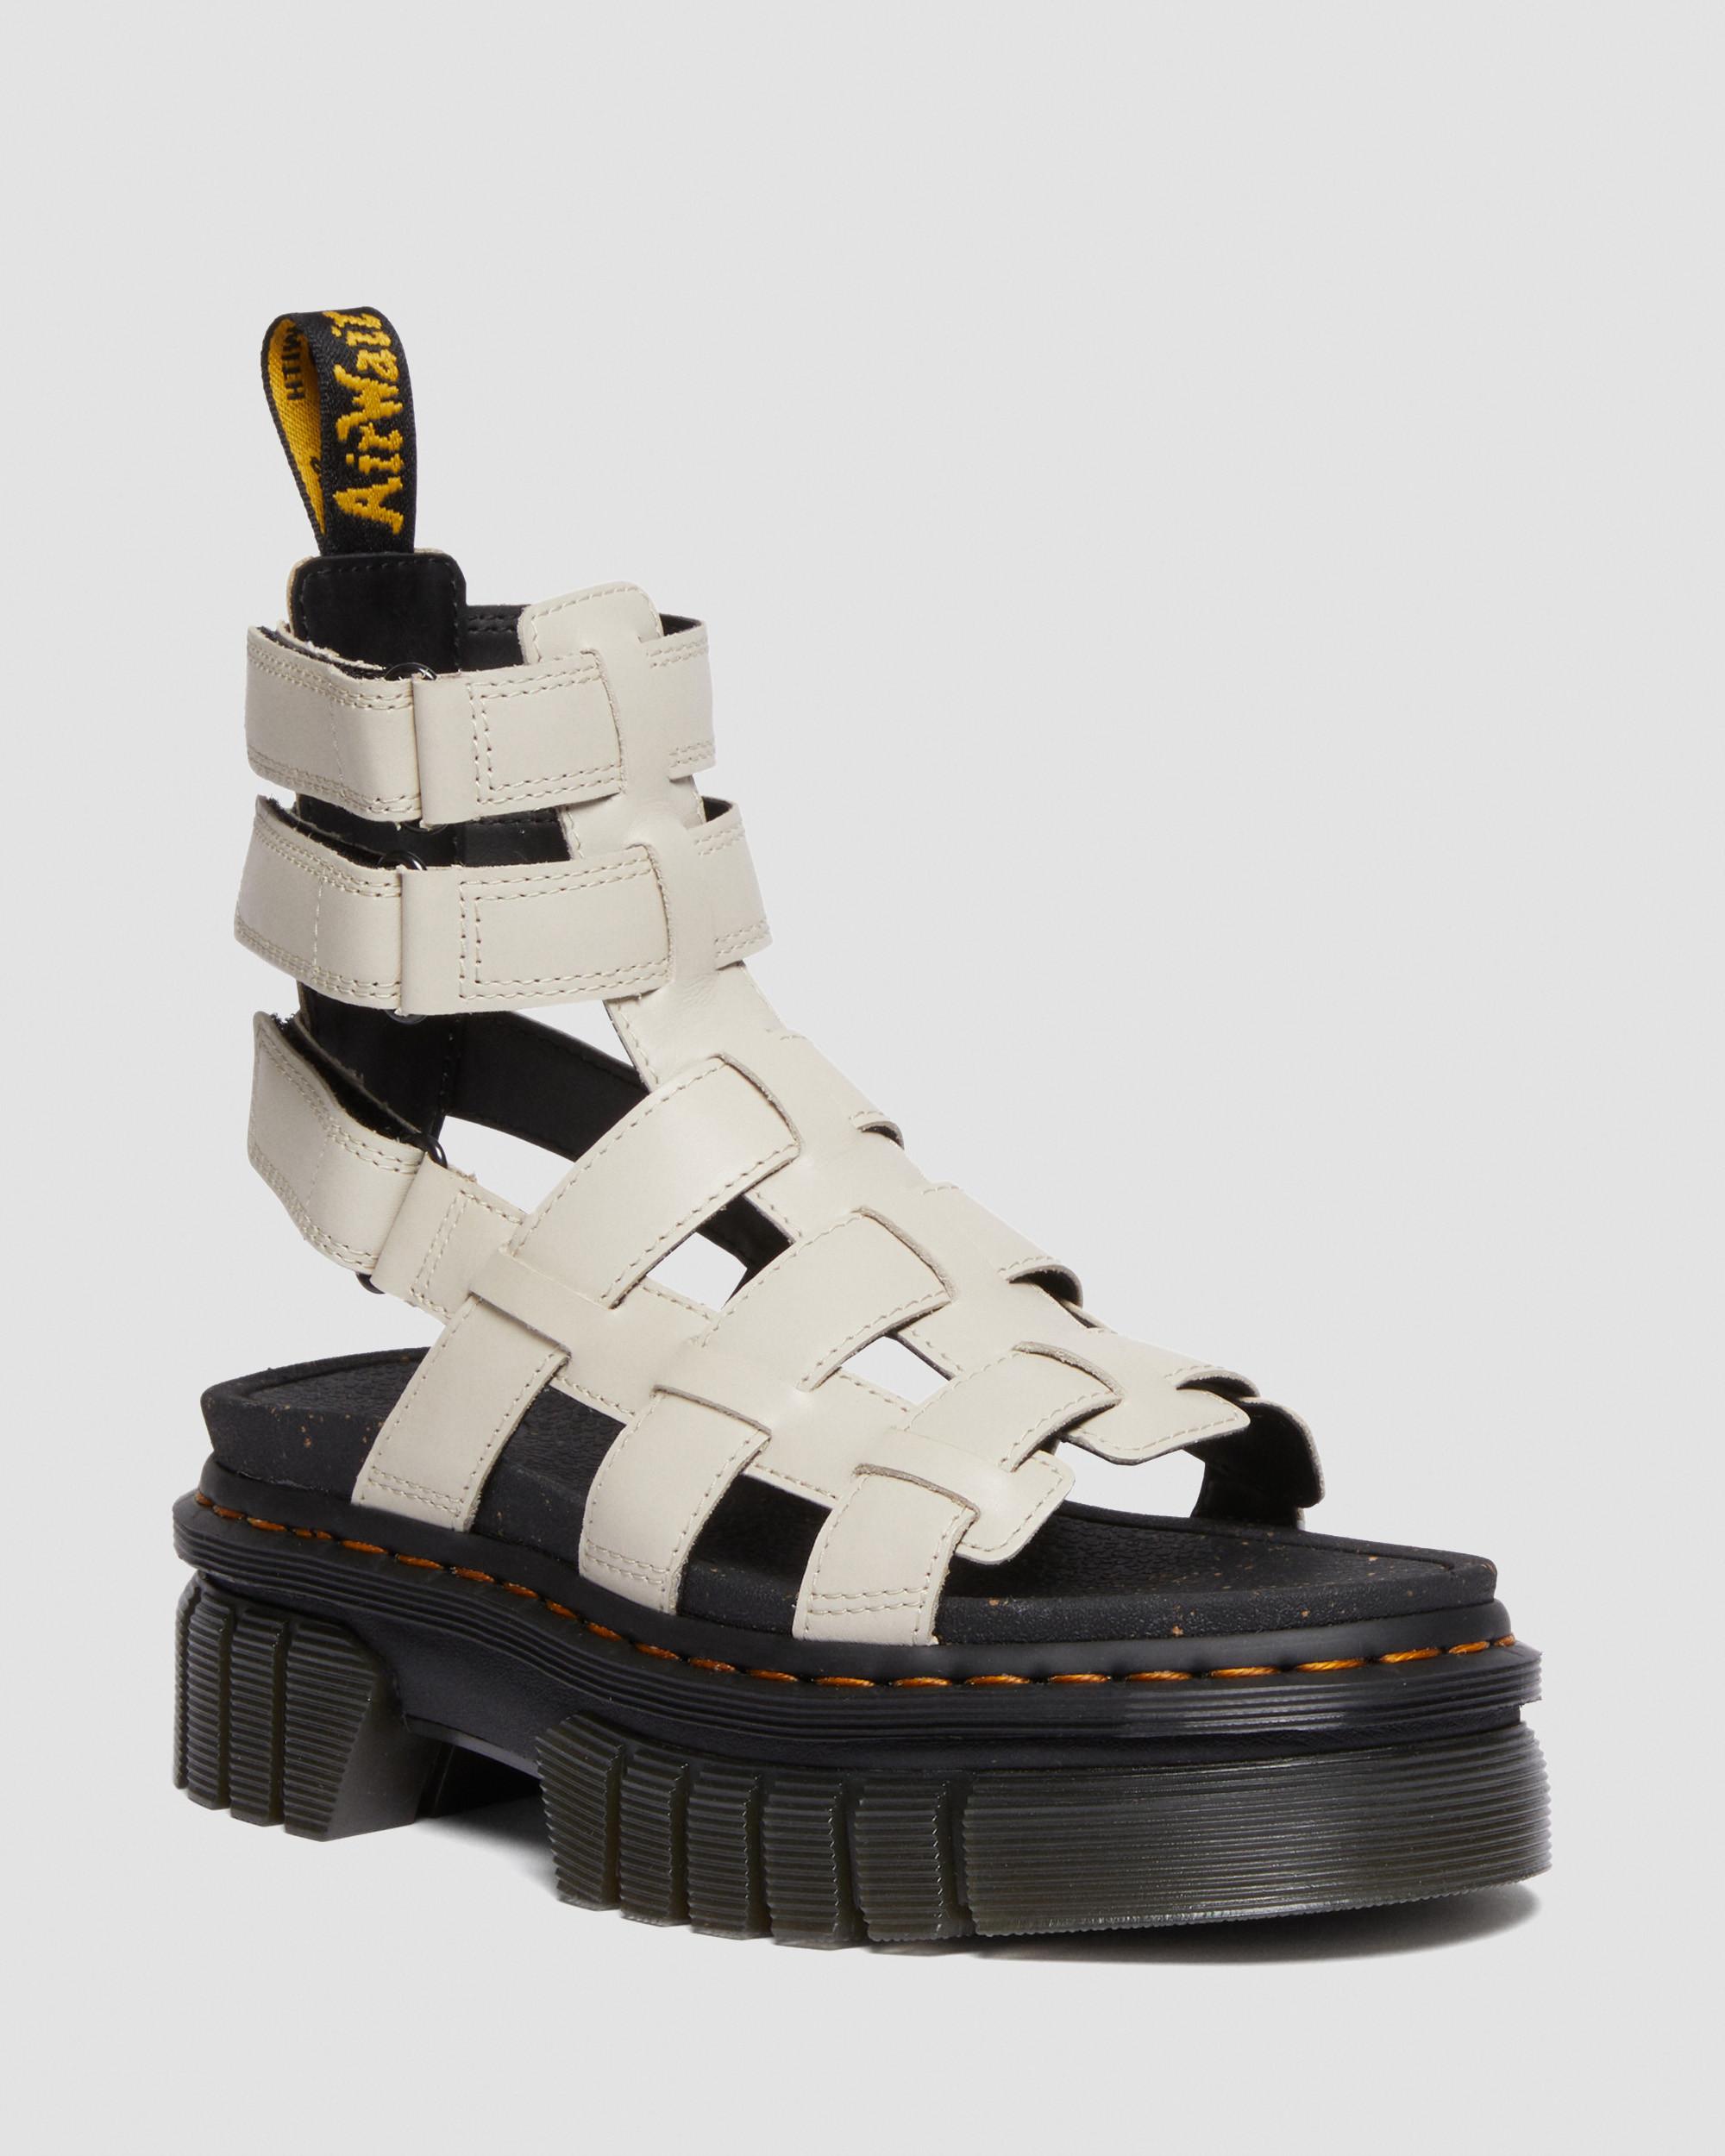 Janice mechanisch zeven Ricki Nappa Lux Leather Platform Gladiator Sandals | Dr. Martens